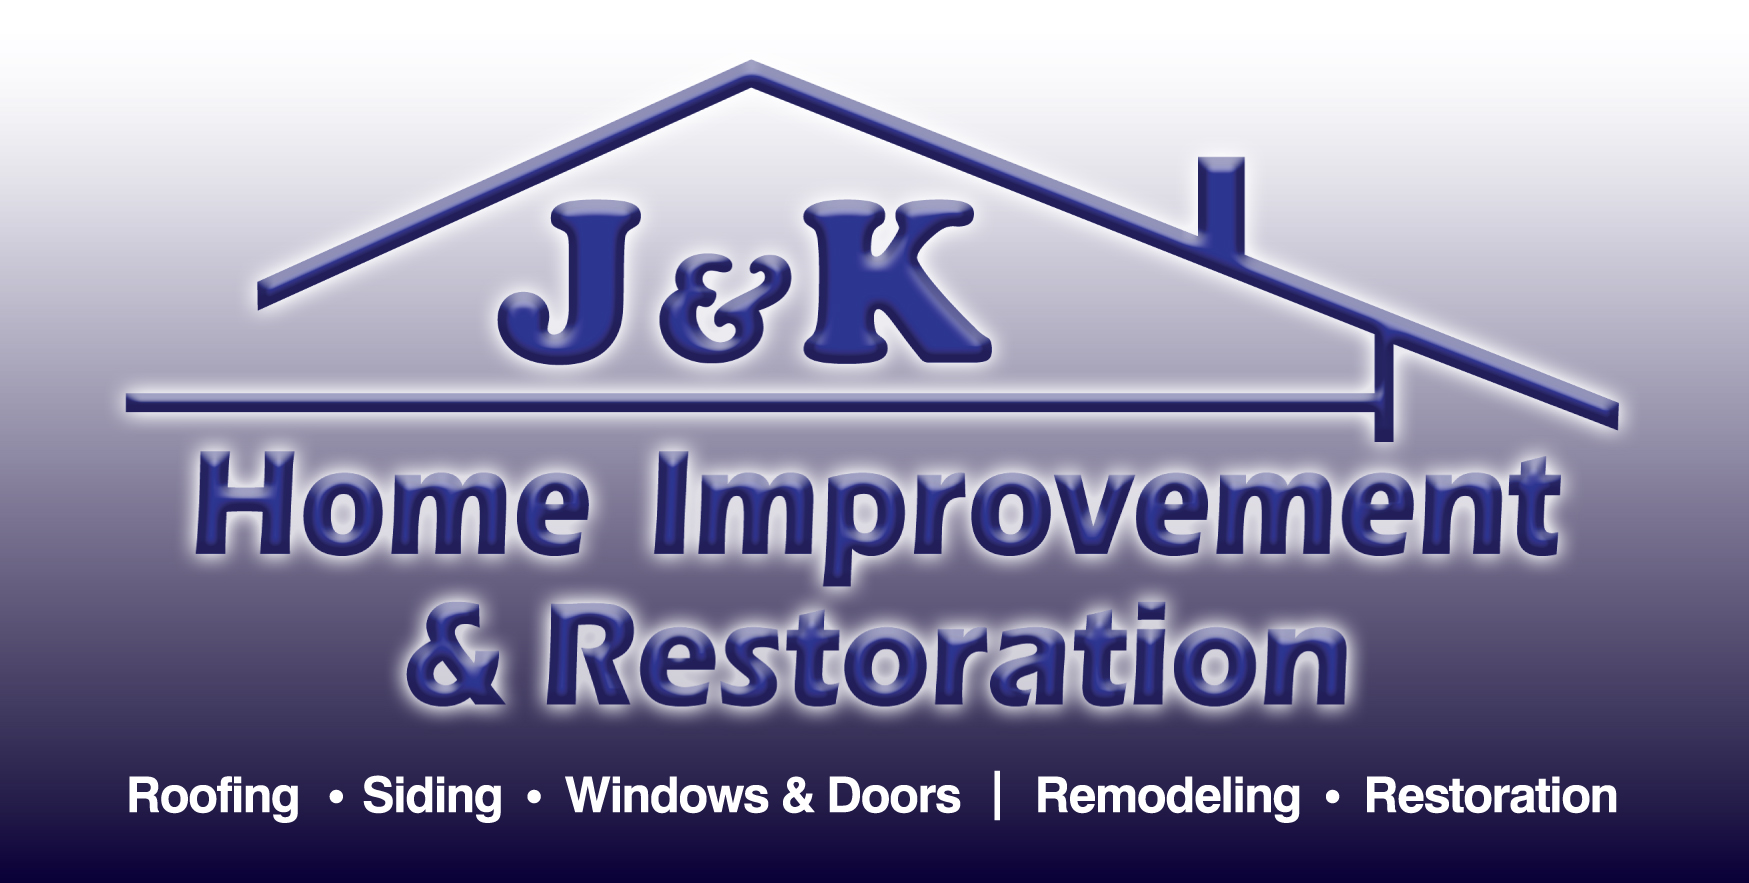 J&K Home Improvement & Restoration Logo